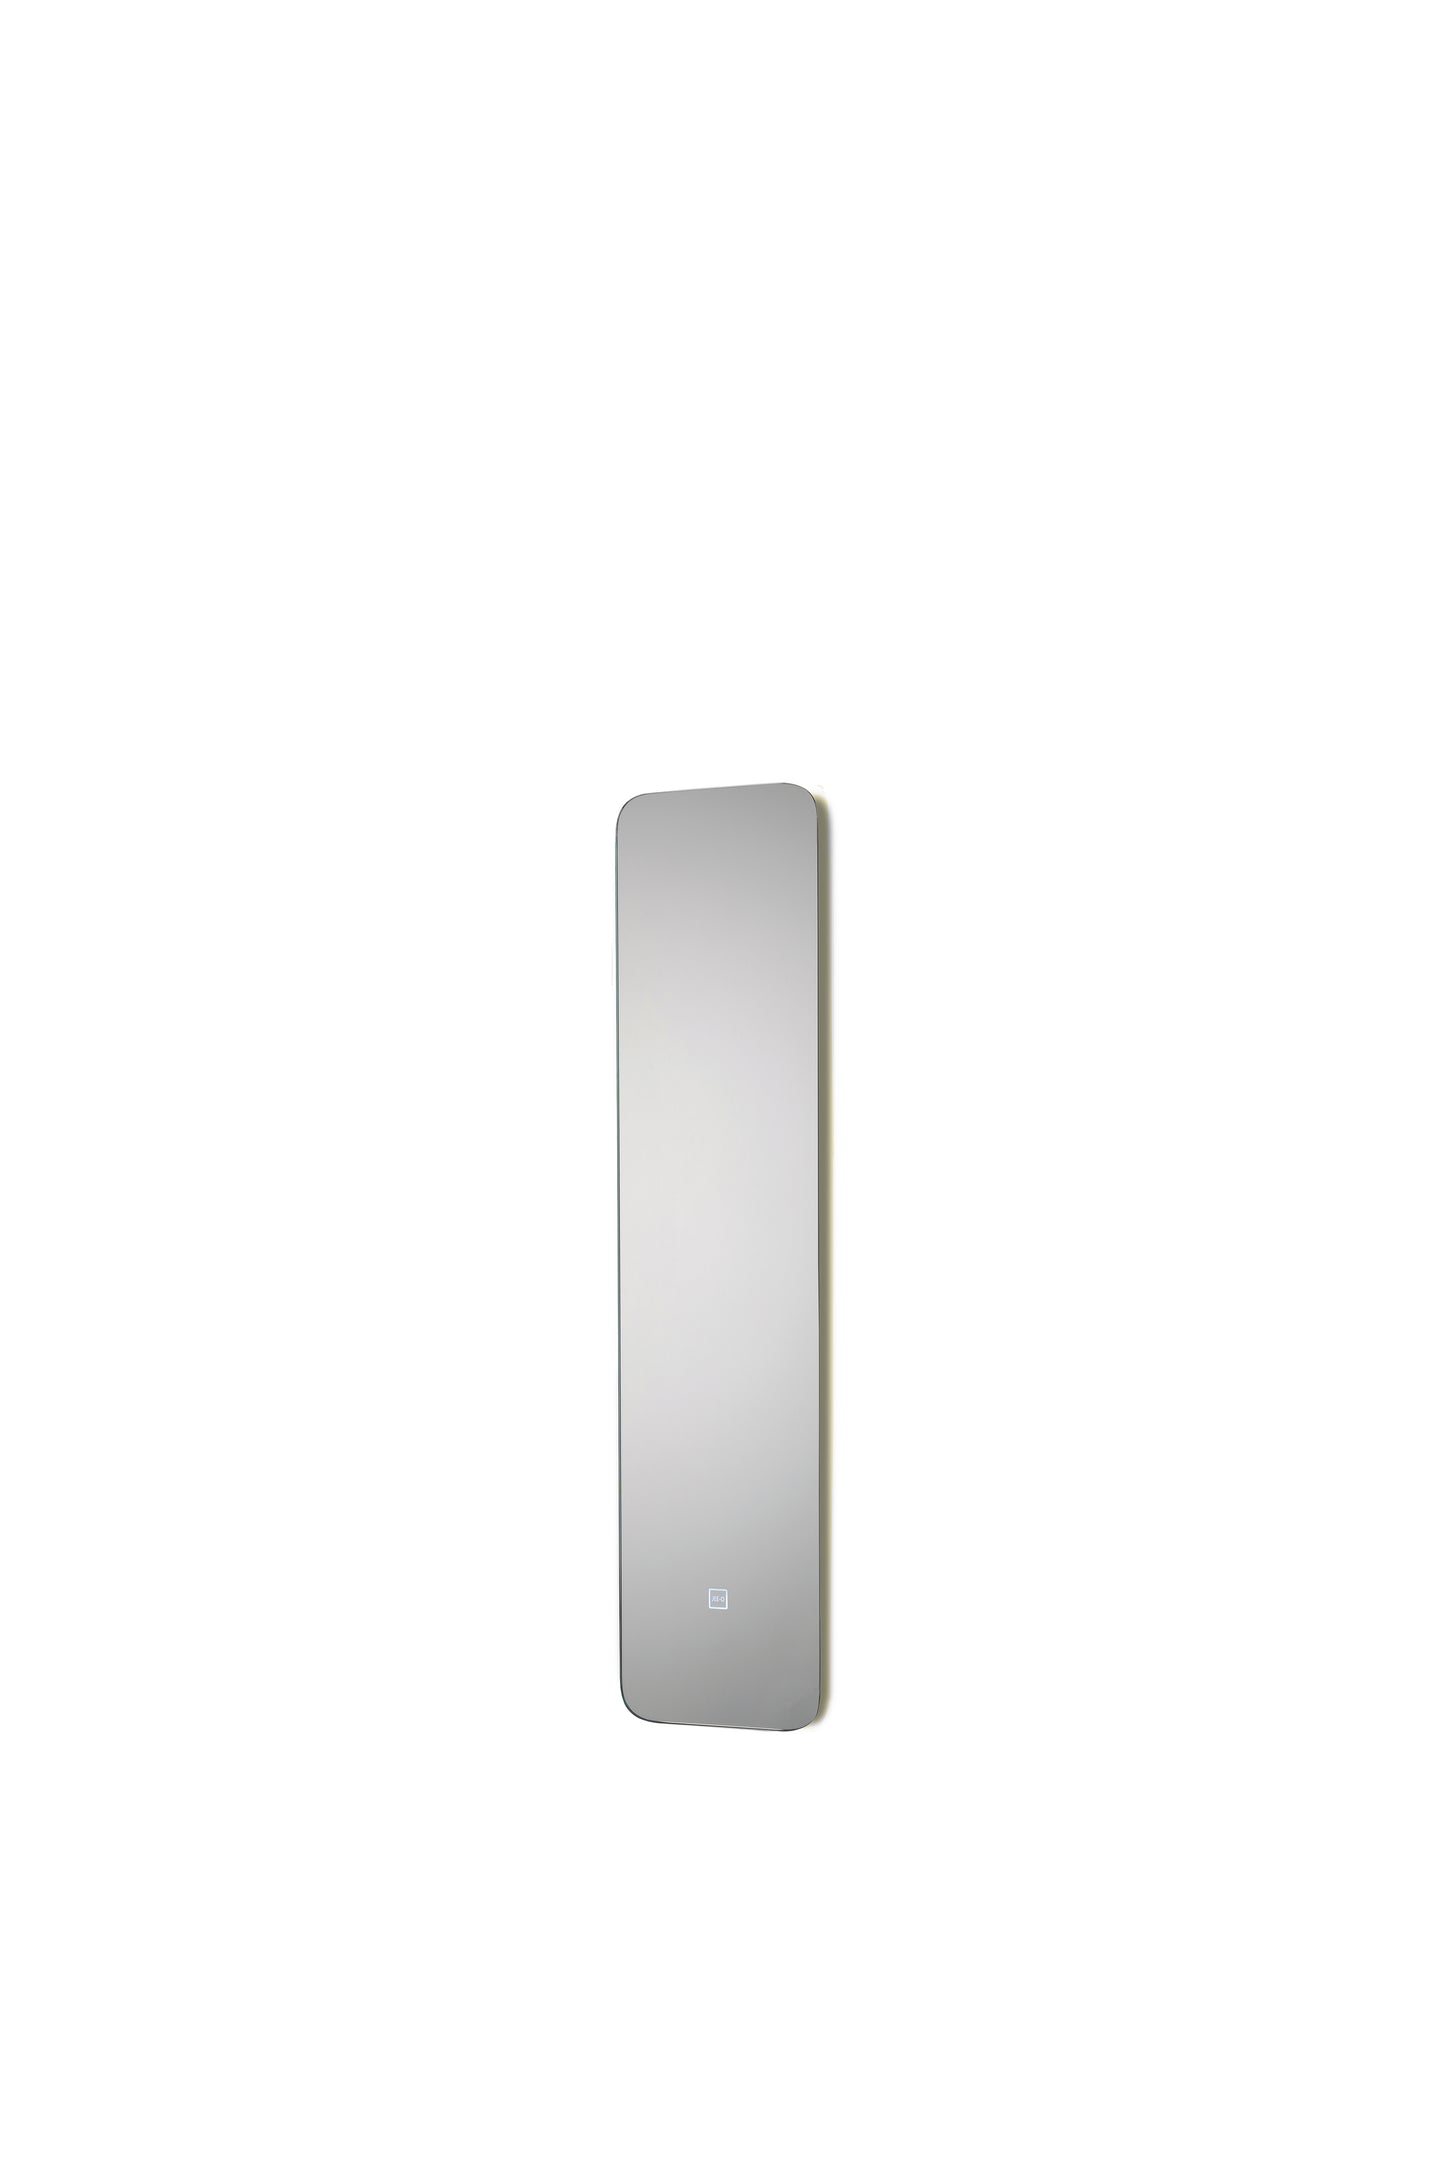 JEE-O Slimline Mirror 18 with adjustable LED backlight W 18 x H 80 cm